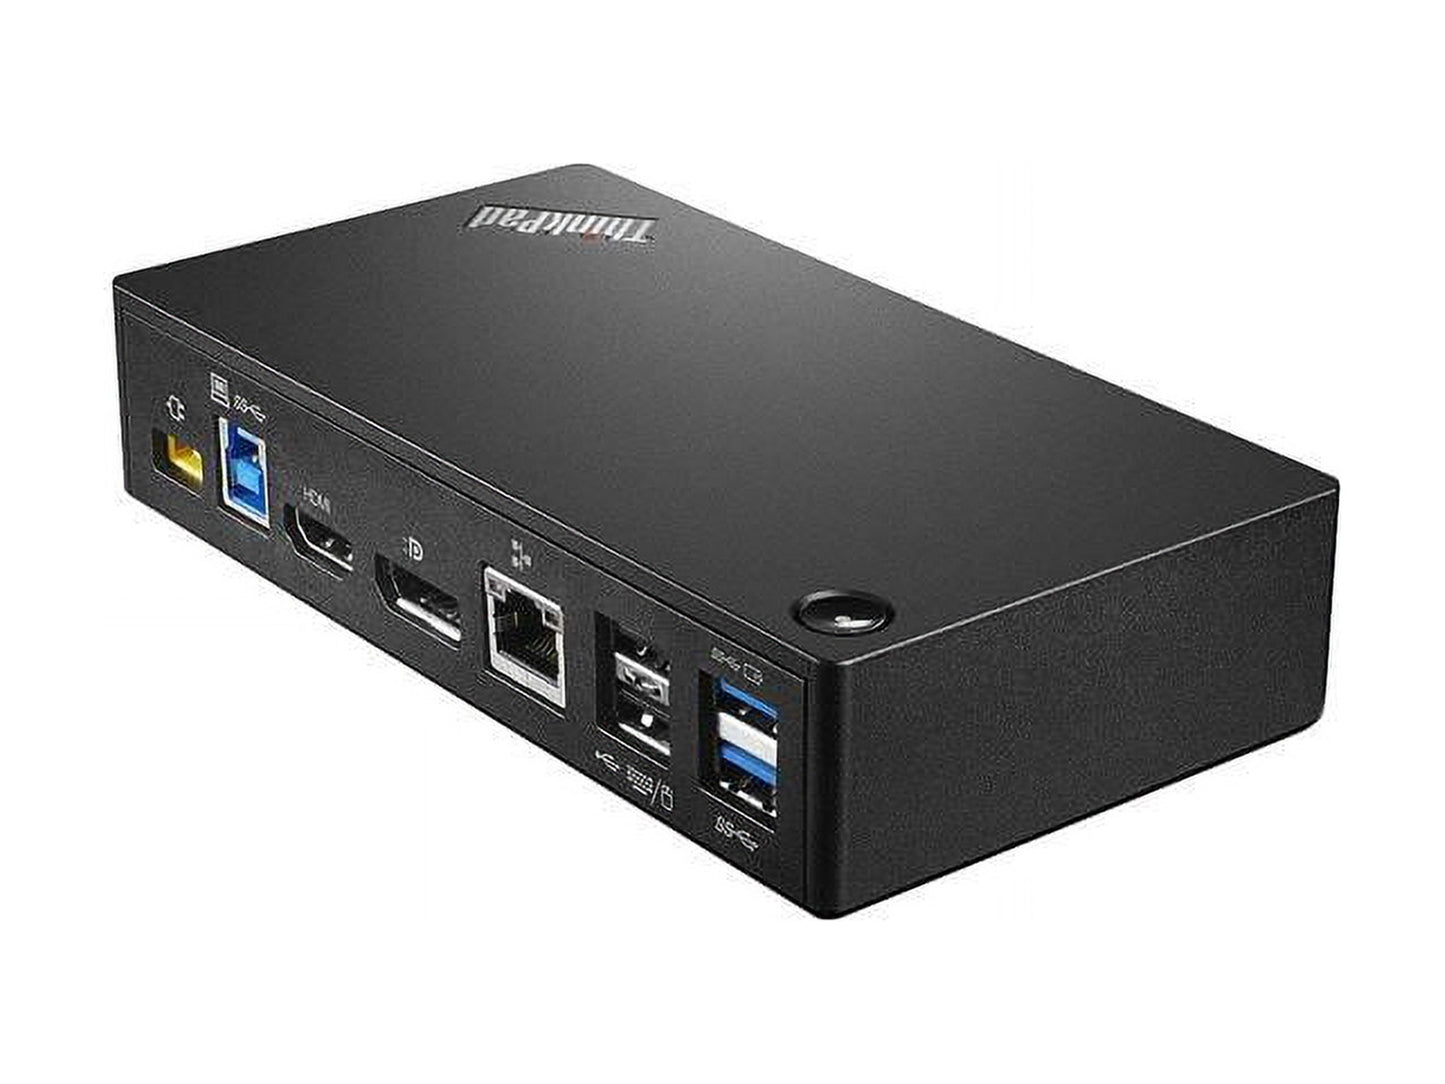 Lenovo ThinkPad USB 3.0 Ultra Docking Station - 40A80045US Used